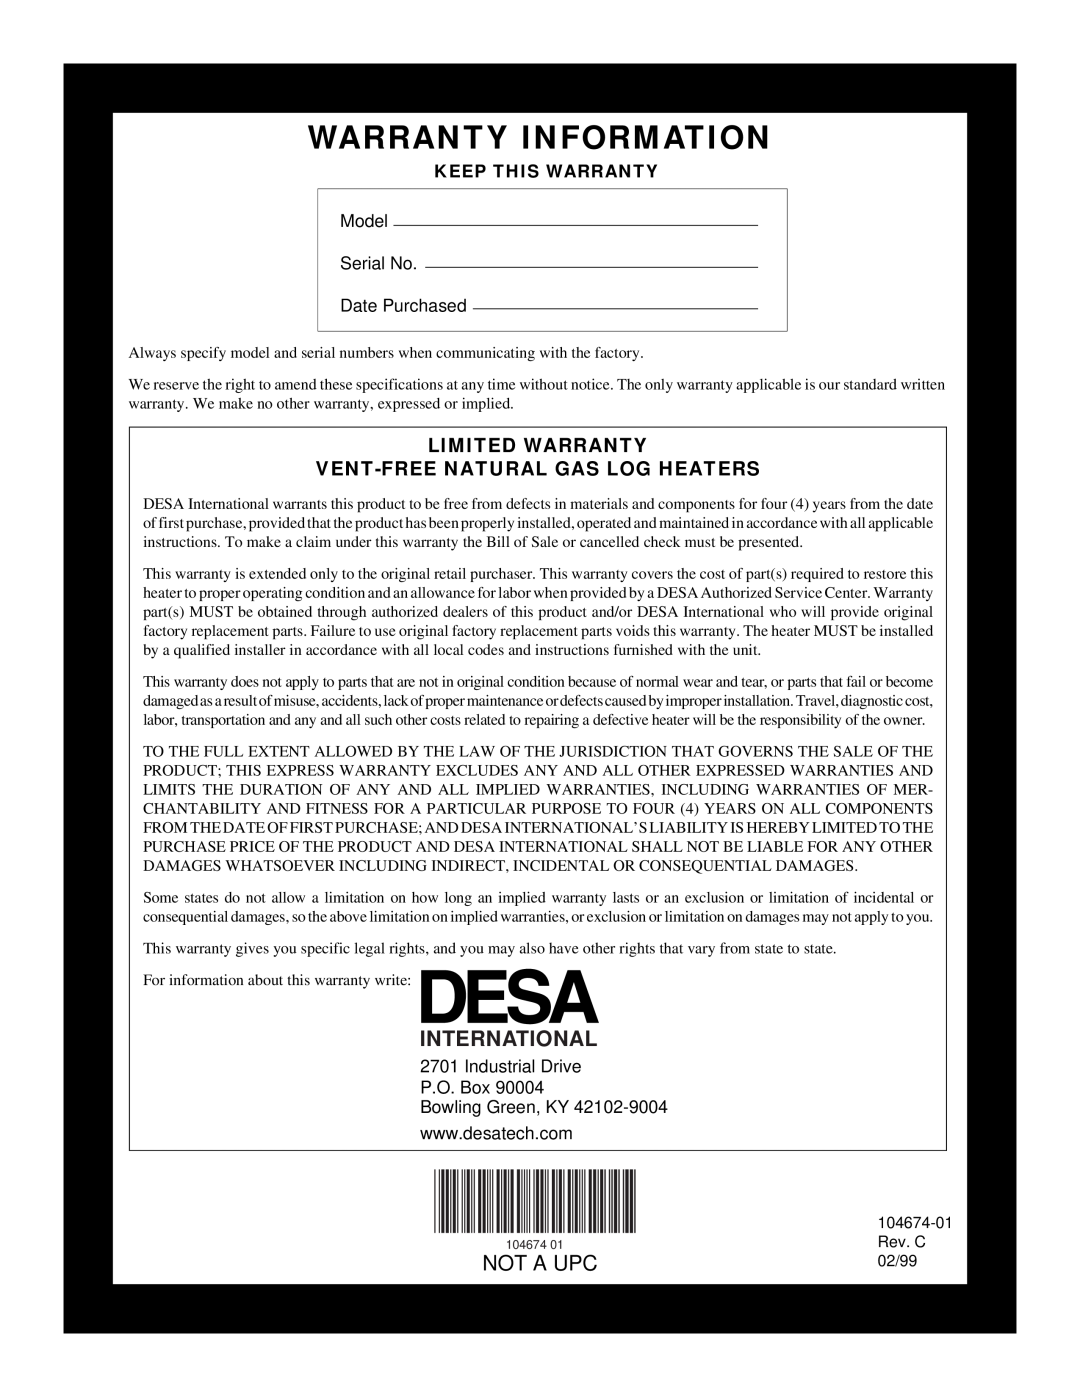 Desa VYM27NR International, Limited Warranty Vent-Freenatural Gas Log Heaters, Warranty Information, Not A Upc 